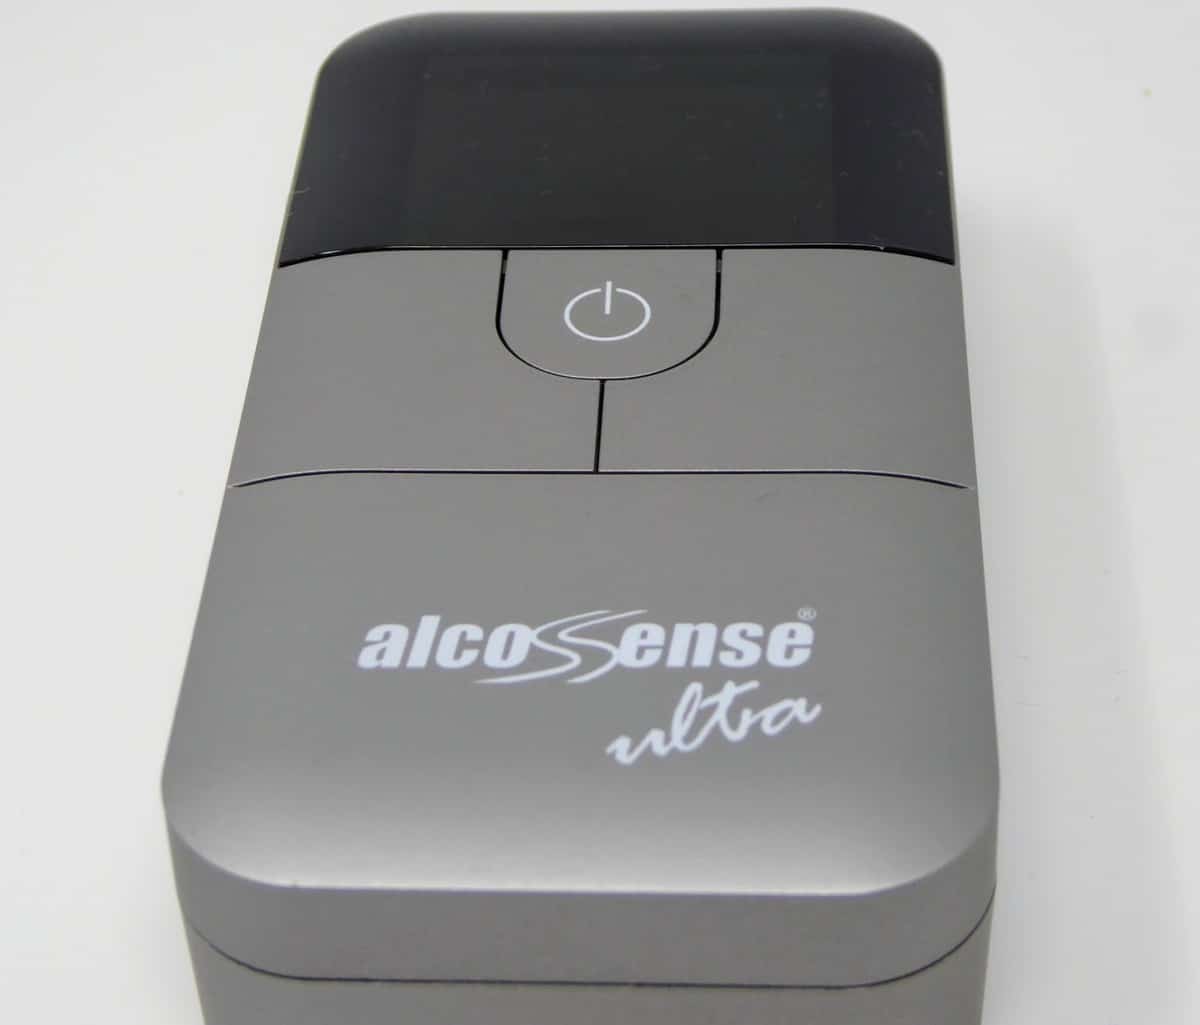 P1020224 - AlcoSense Ultra Home Breathalyser Review